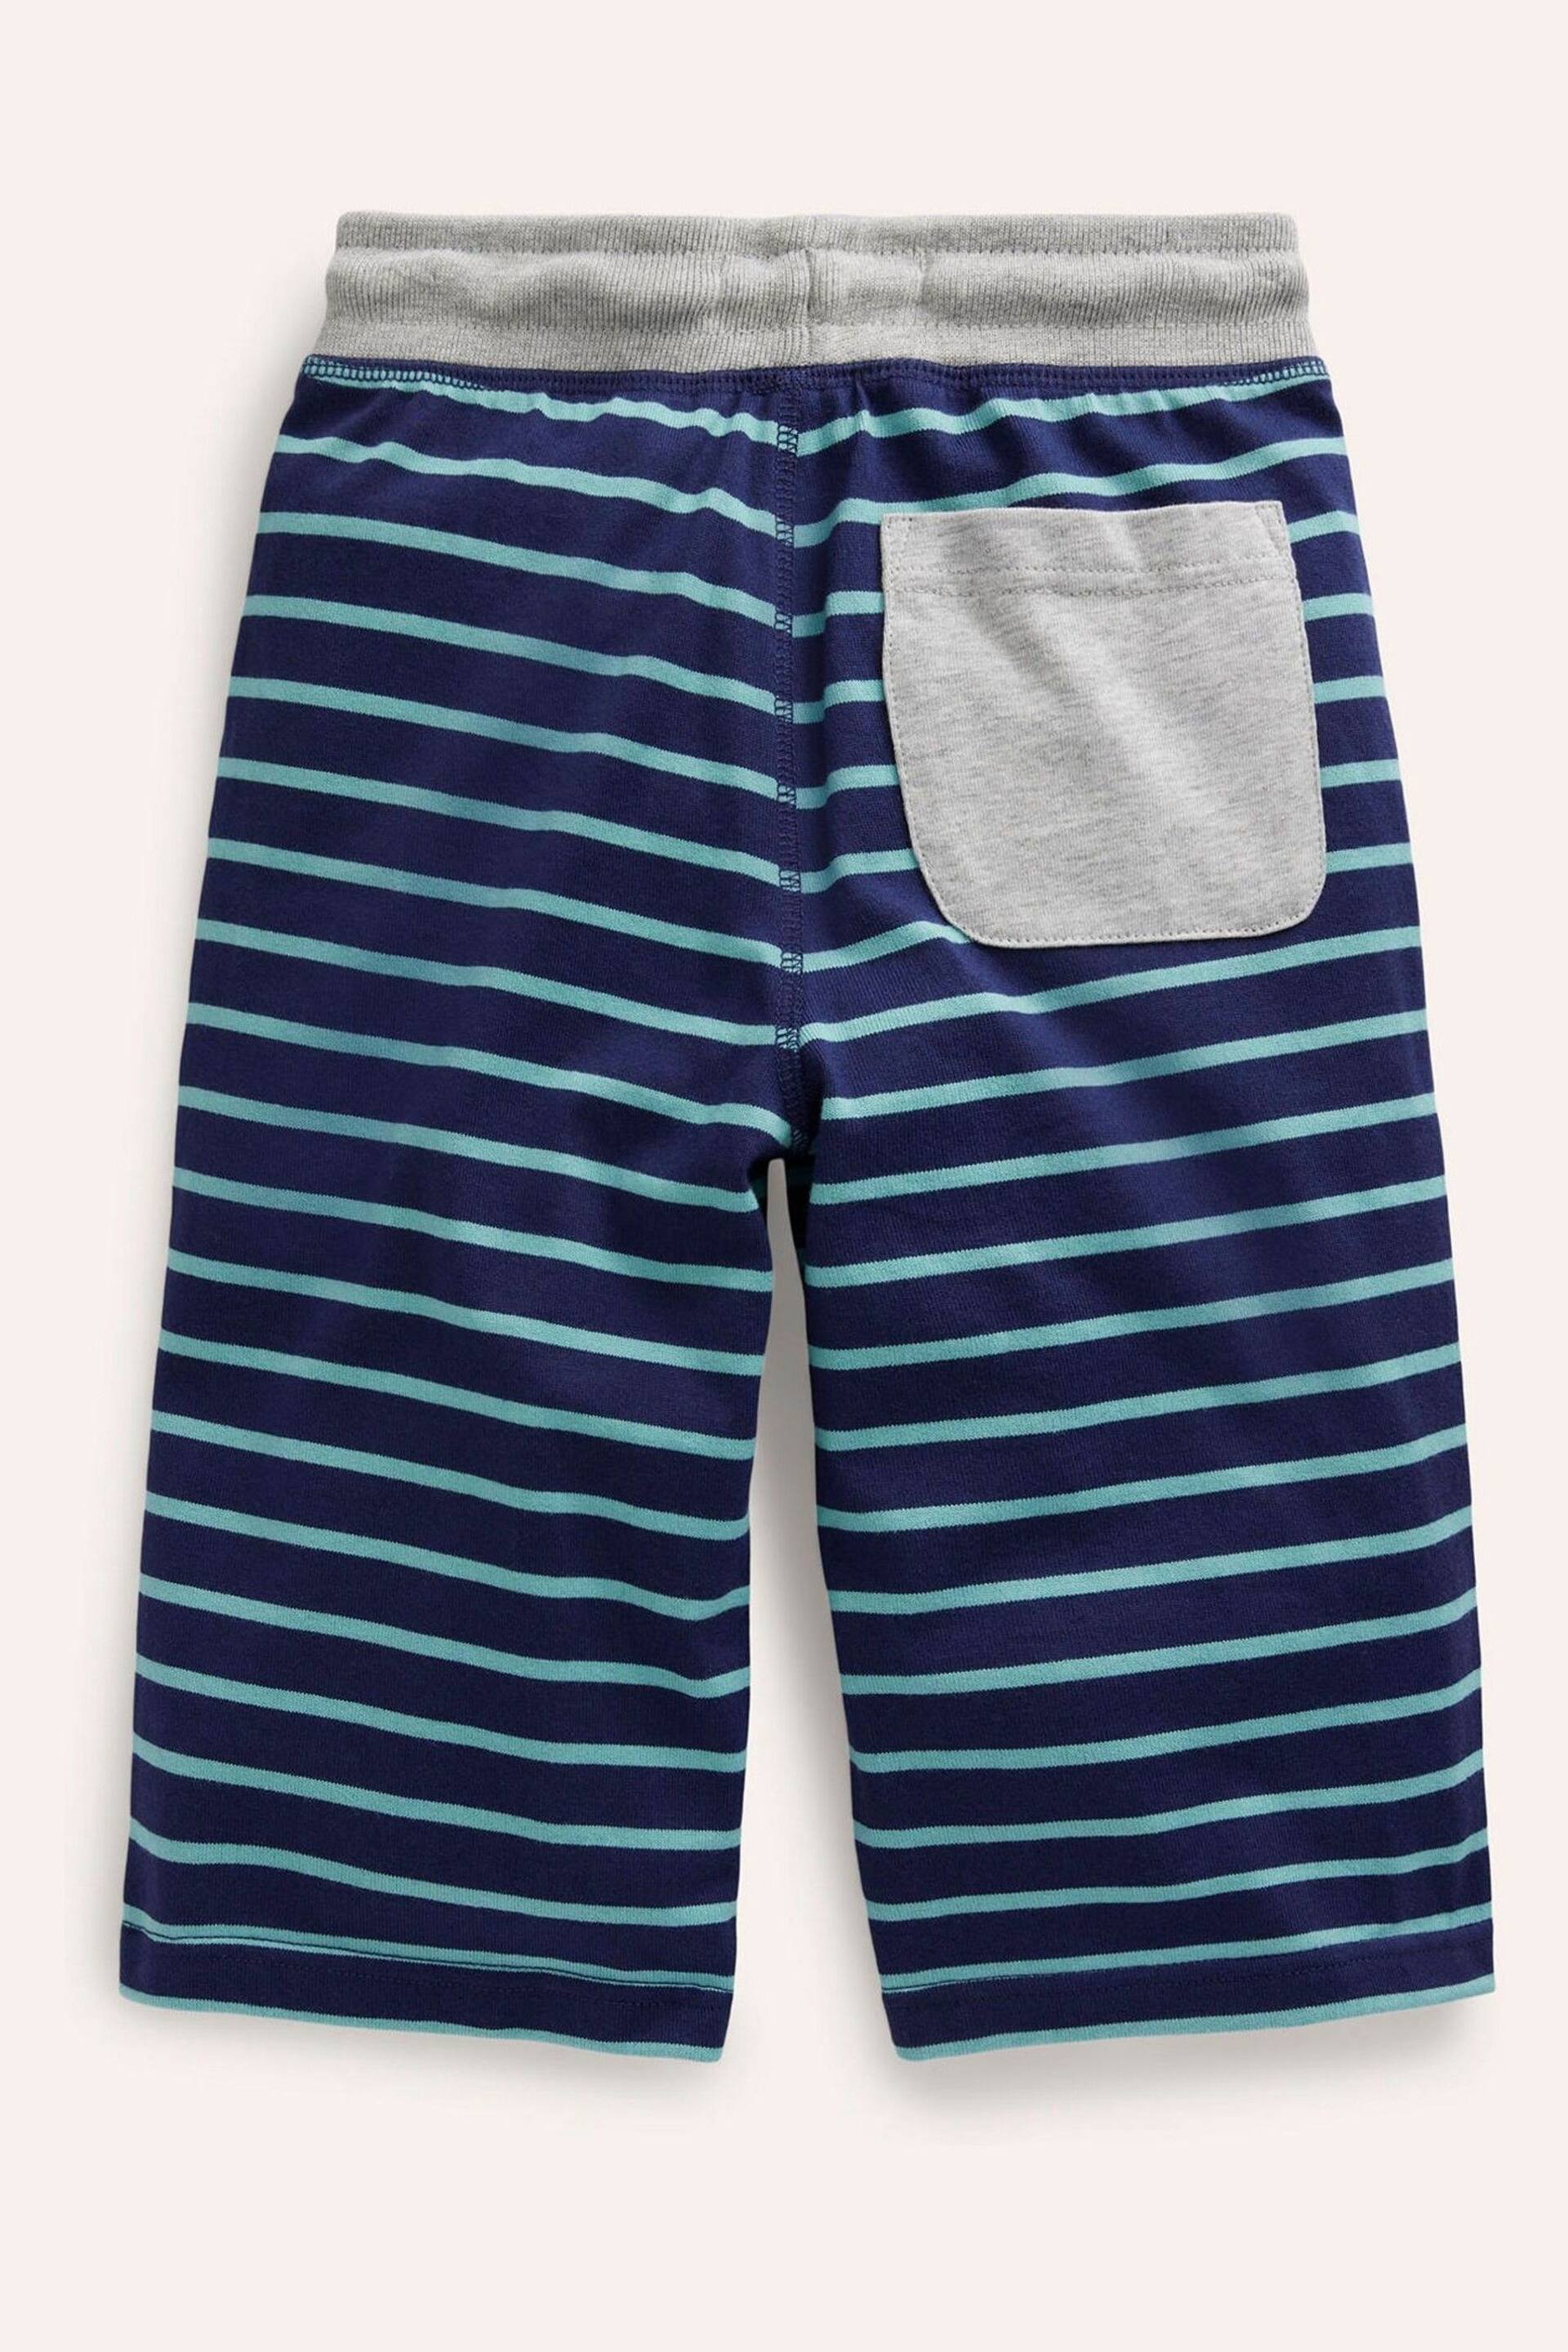 Boden Blue Dark Baggies Jersey Shorts - Image 2 of 3